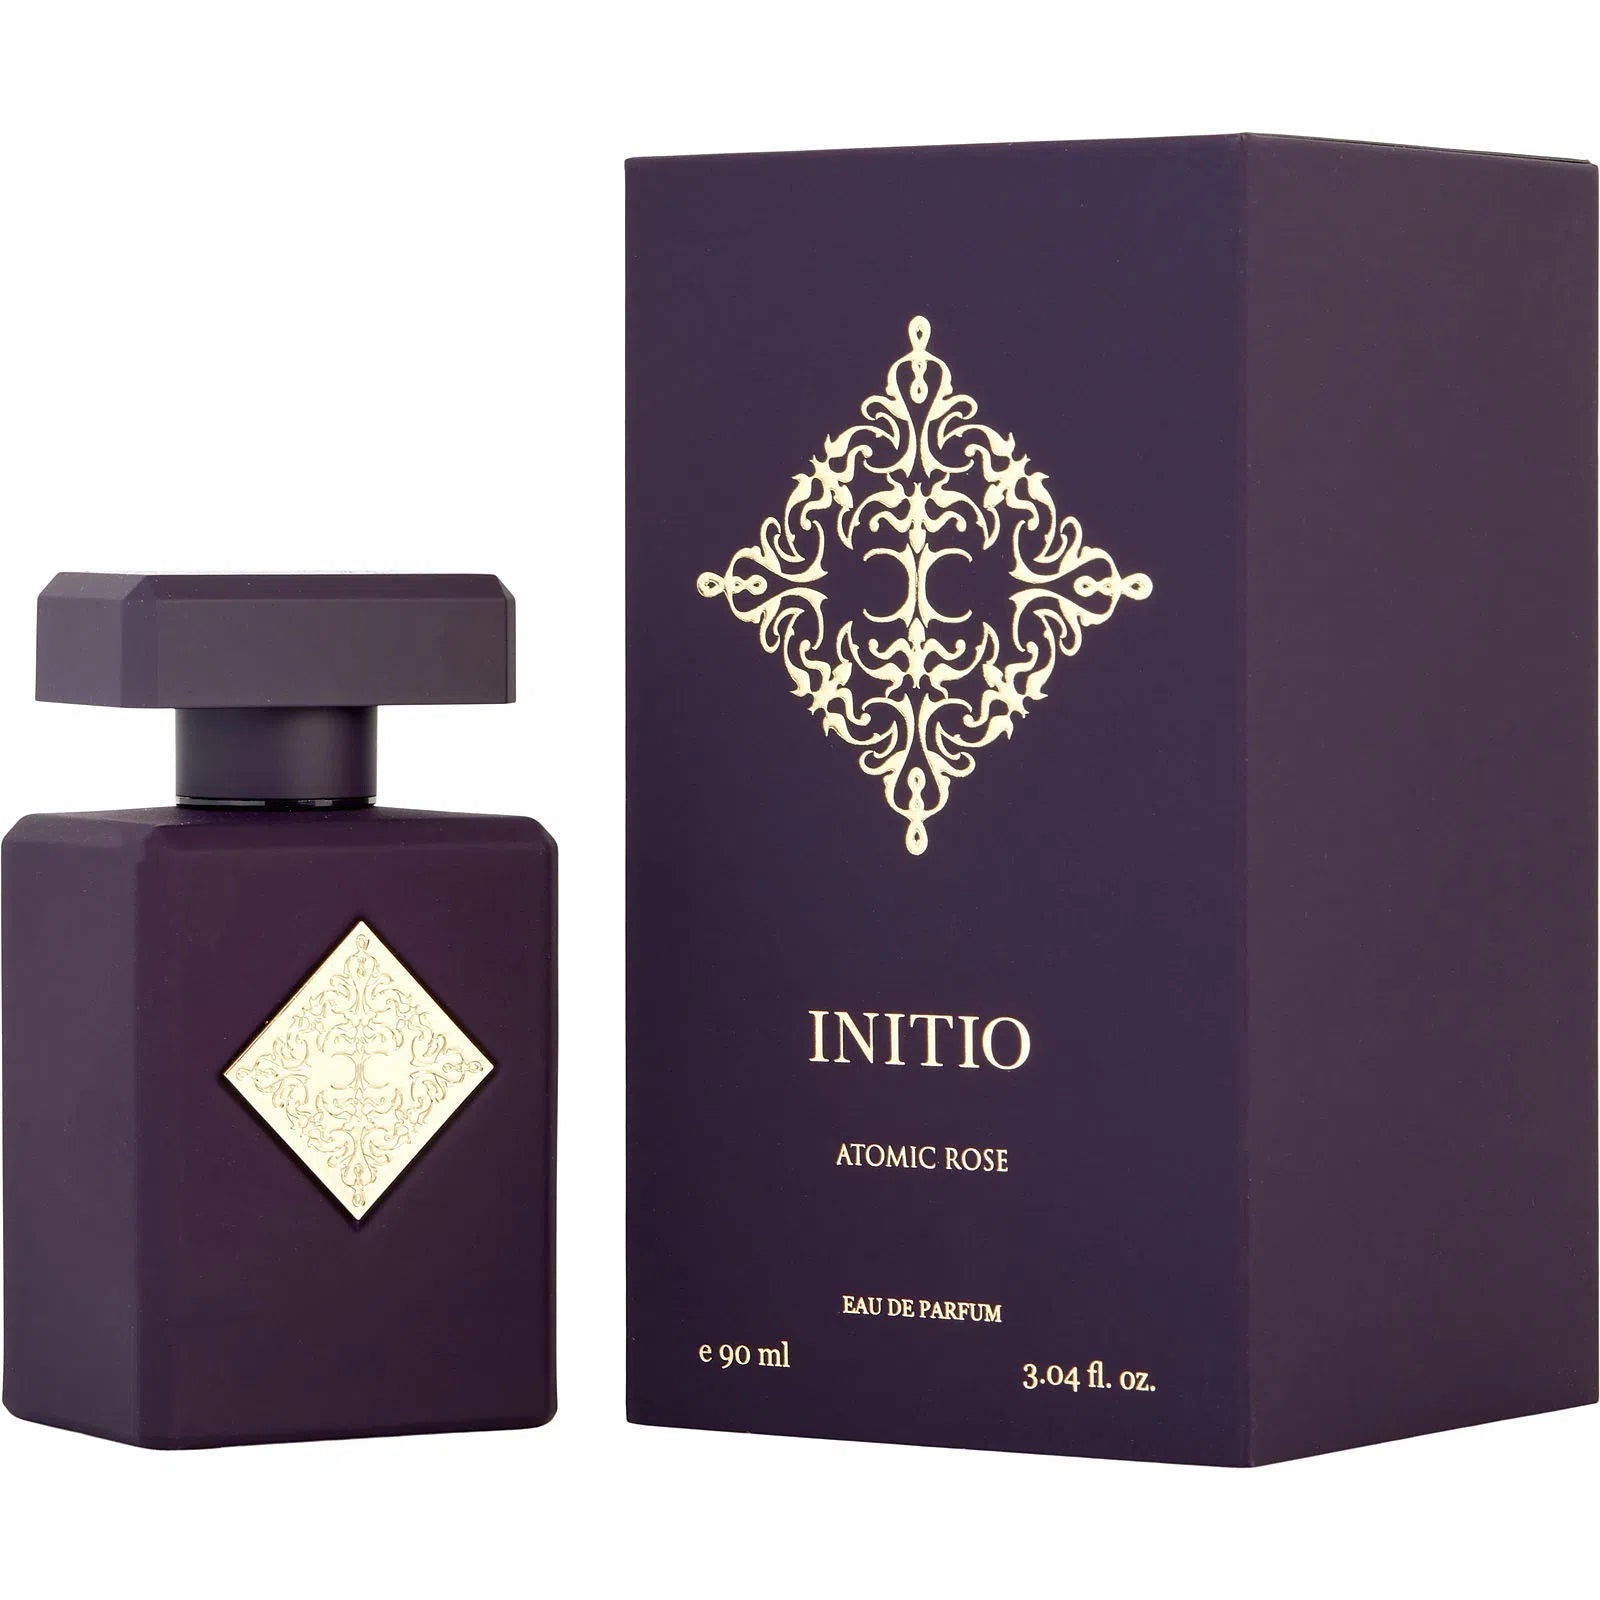 Perfume Initio Atomic Rose EDP (U) / 90 ml - 3701415901421- Prive Perfumes Honduras